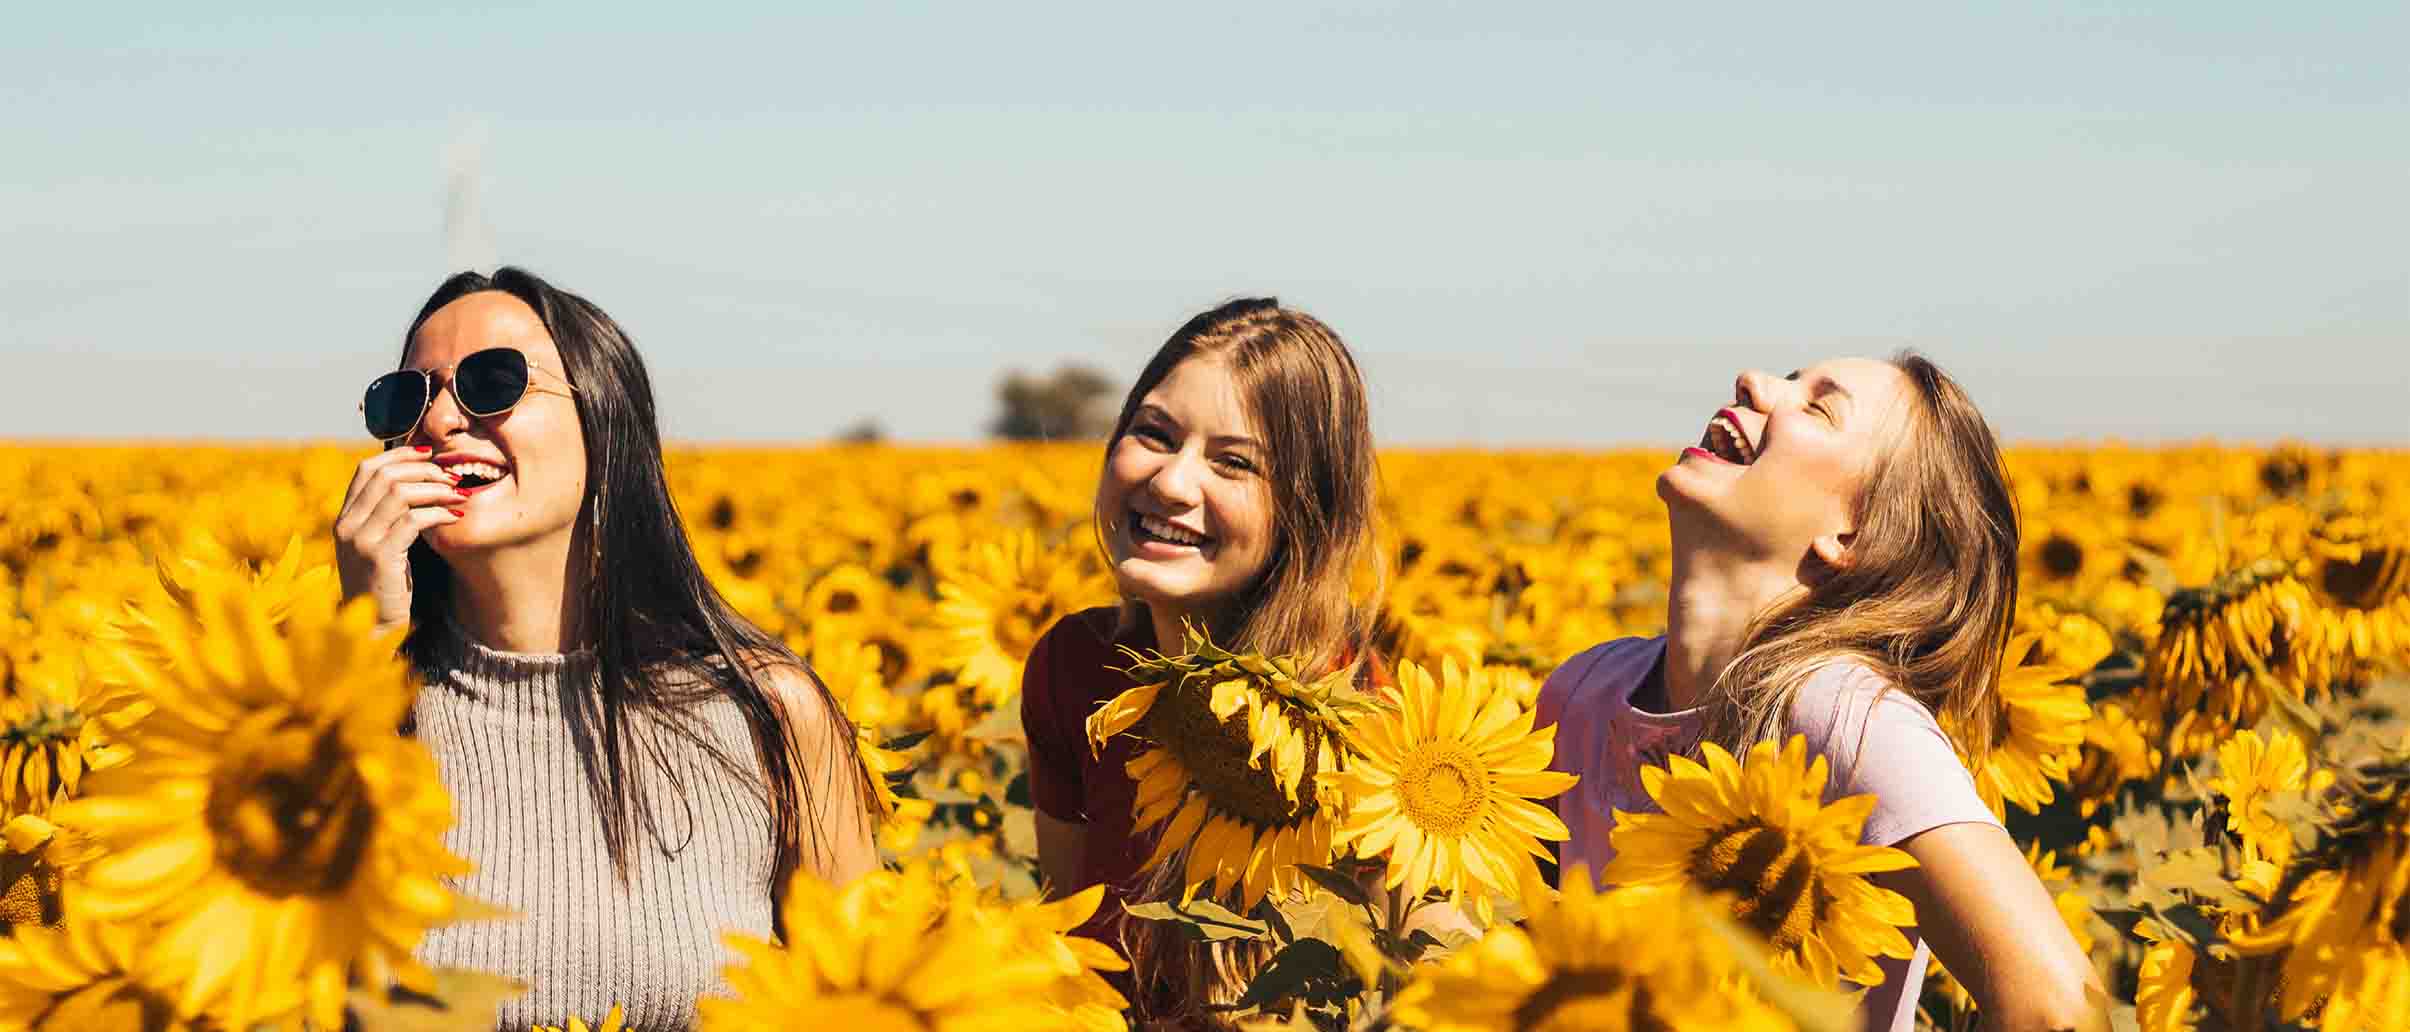 Three friends in sunflower field